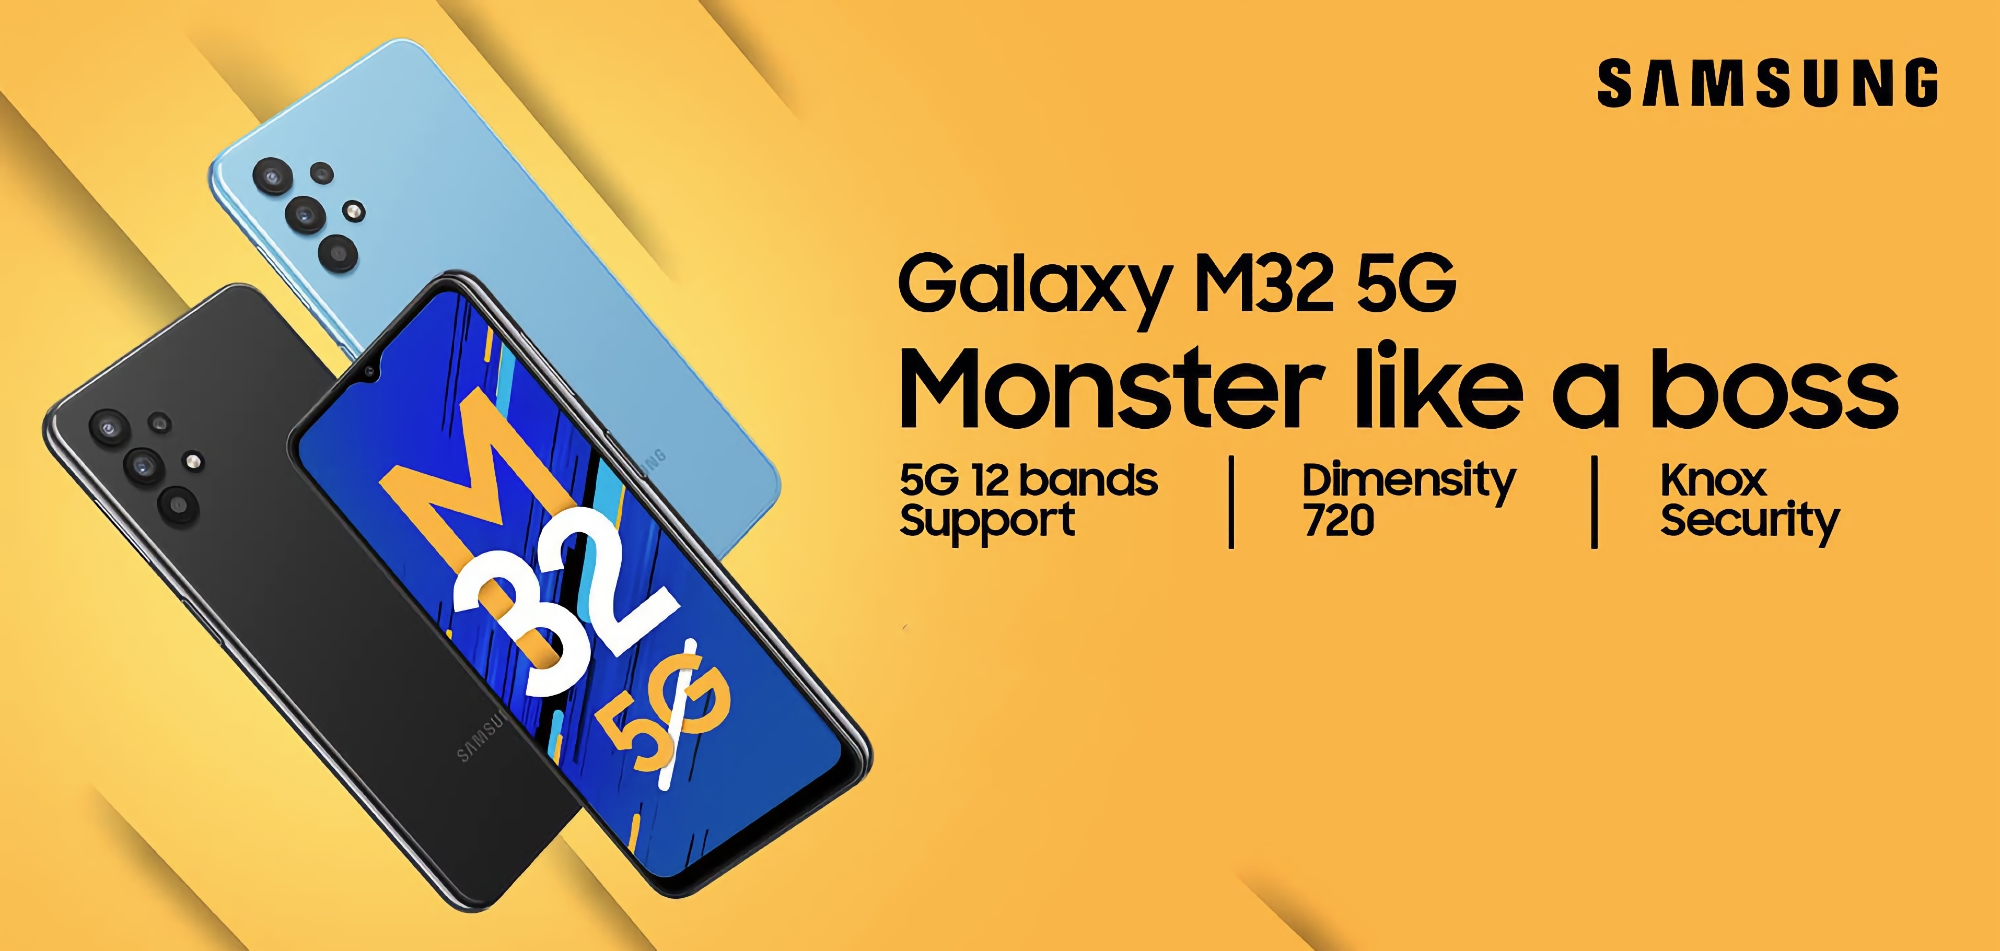 Samsung kündigt Galaxy M32 5G an: Nachbau des Galaxy A32 5G mit MediaTek Dimensity 720 Chip, 5000mAh Akku und Preis ab 282$